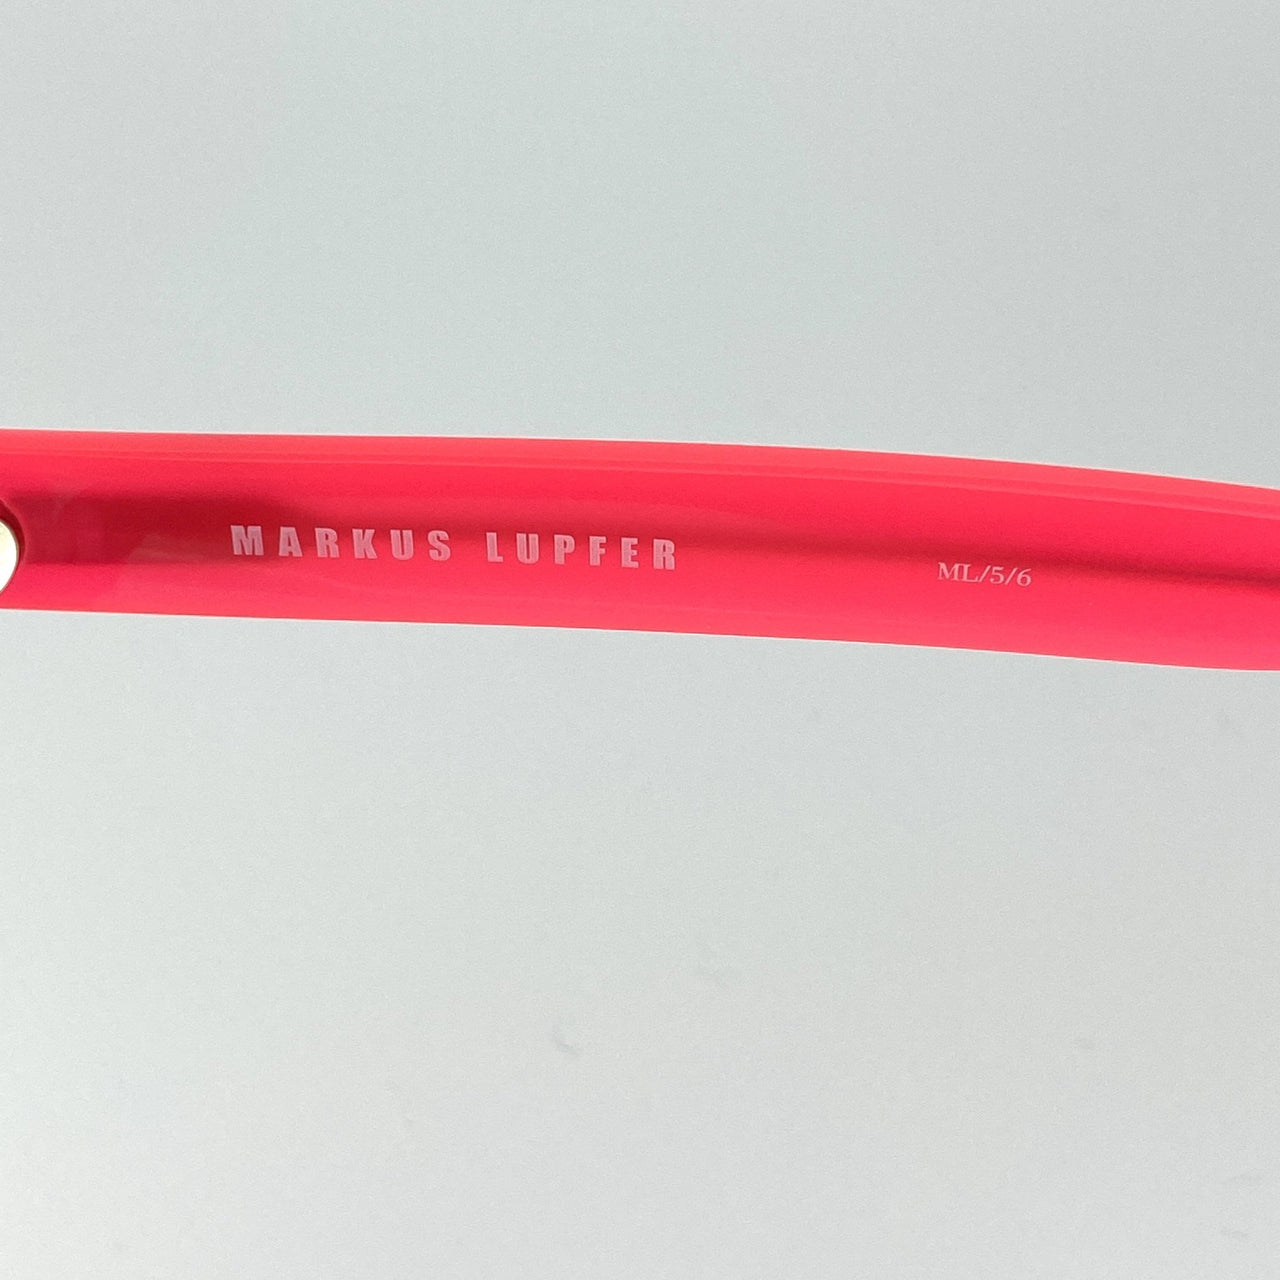 Markus Lupfer Sunglasses D-Frame Blue Glitter Neon Pink Lenses Category 3 Dark Tint ML5C6SUN - Watches & Crystals